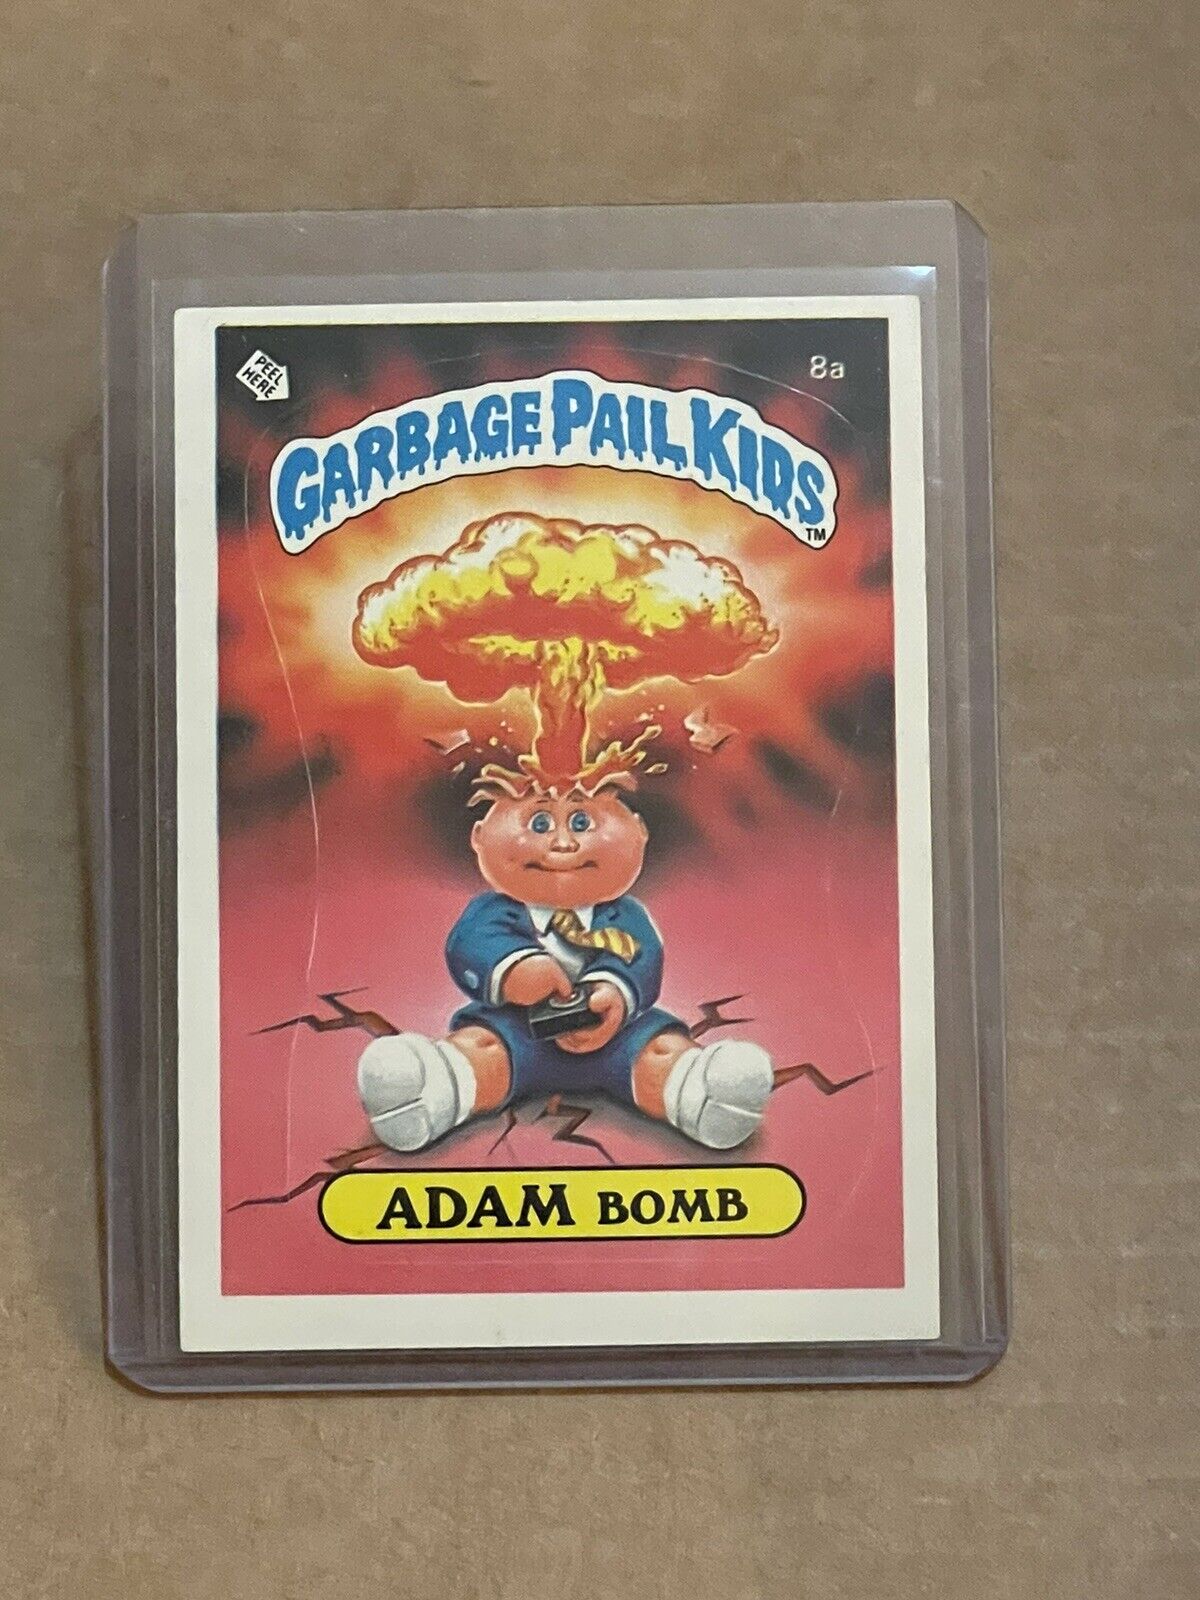 1985 Topps Garbage Pail Kids GPK Series 1 OS1 #8a ADAM BOMB Matte Checklist NICE